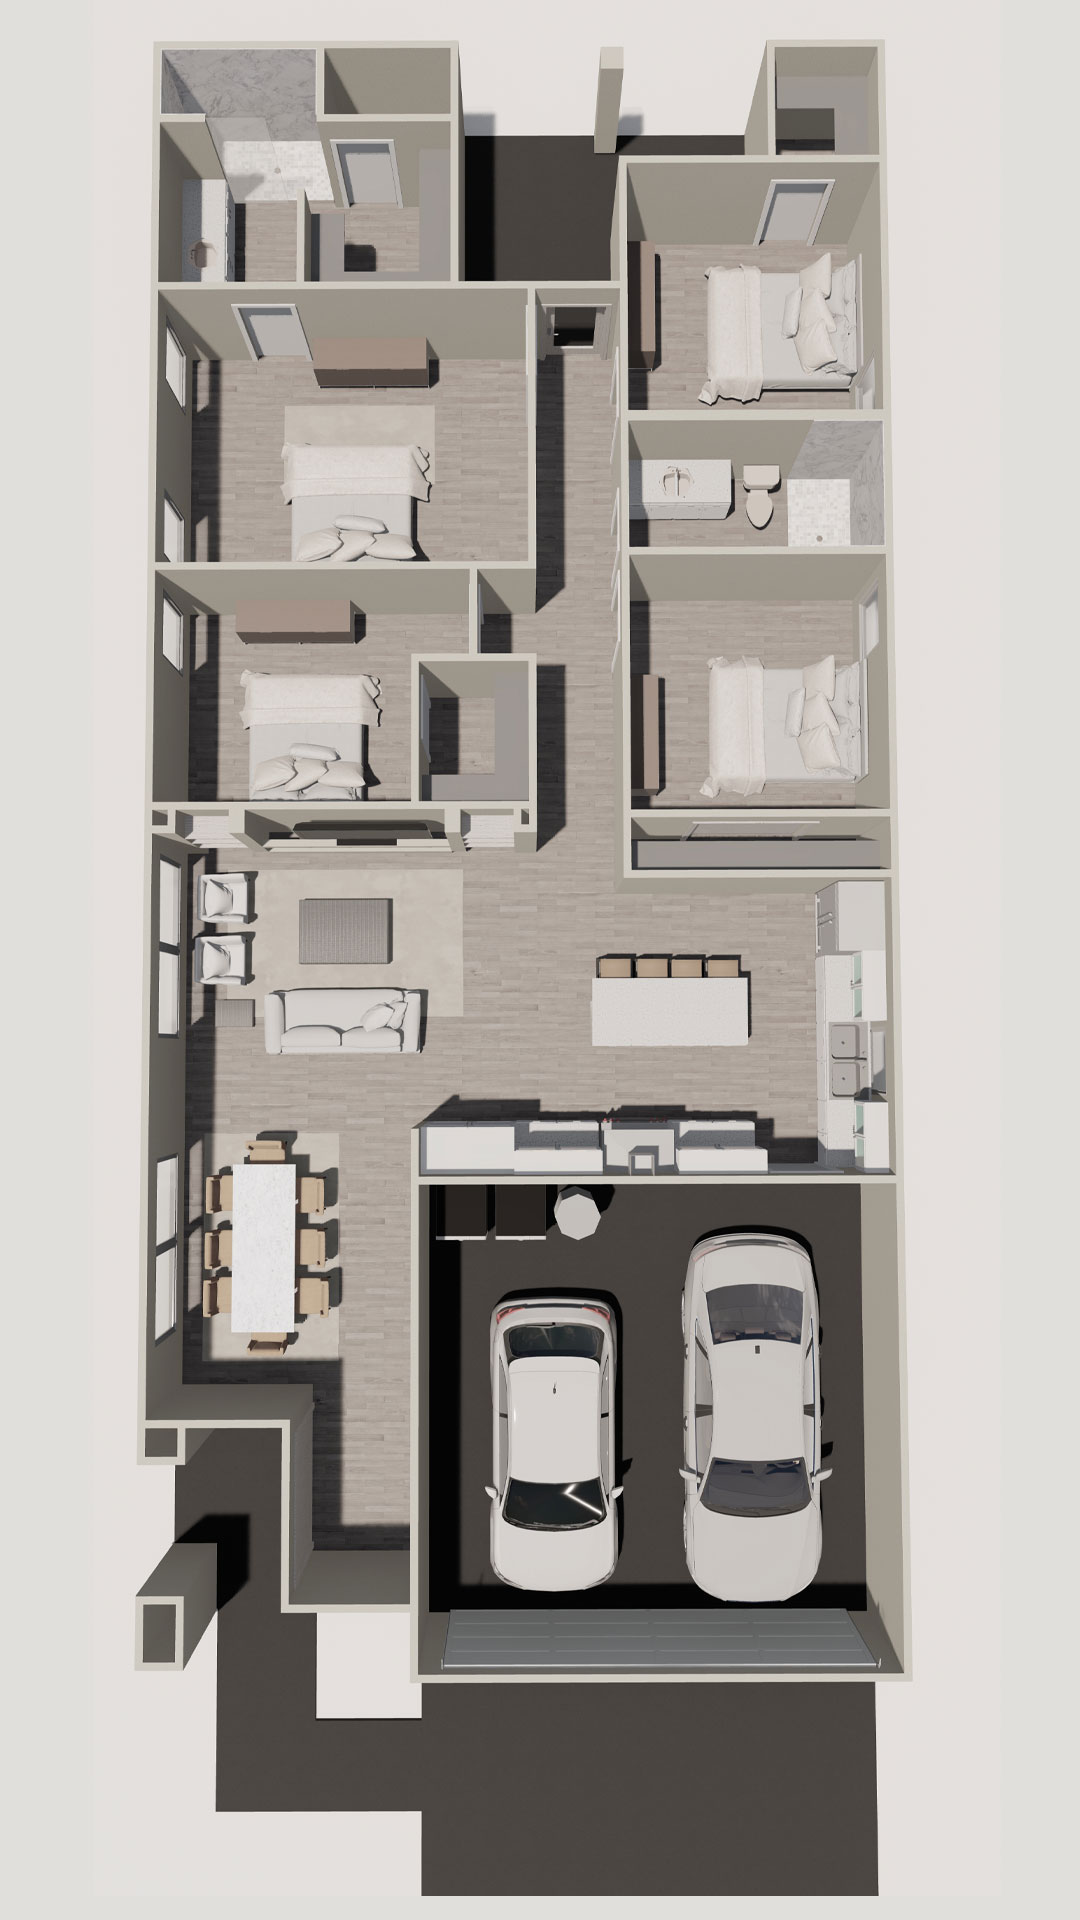 Leon House Model Floor Plan 2